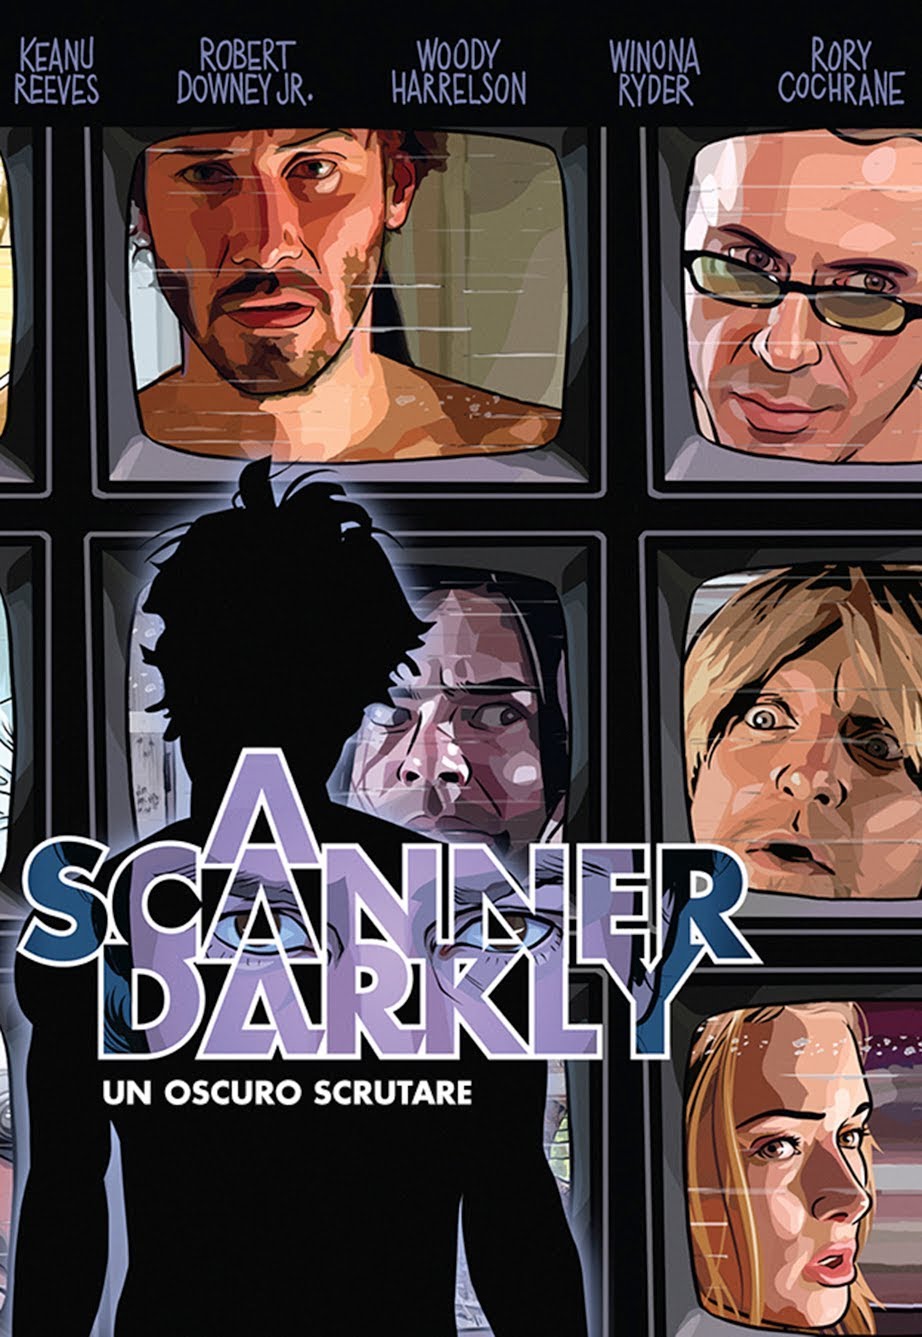 A Scanner Darkly – Un oscuro scrutare [HD] (2006)